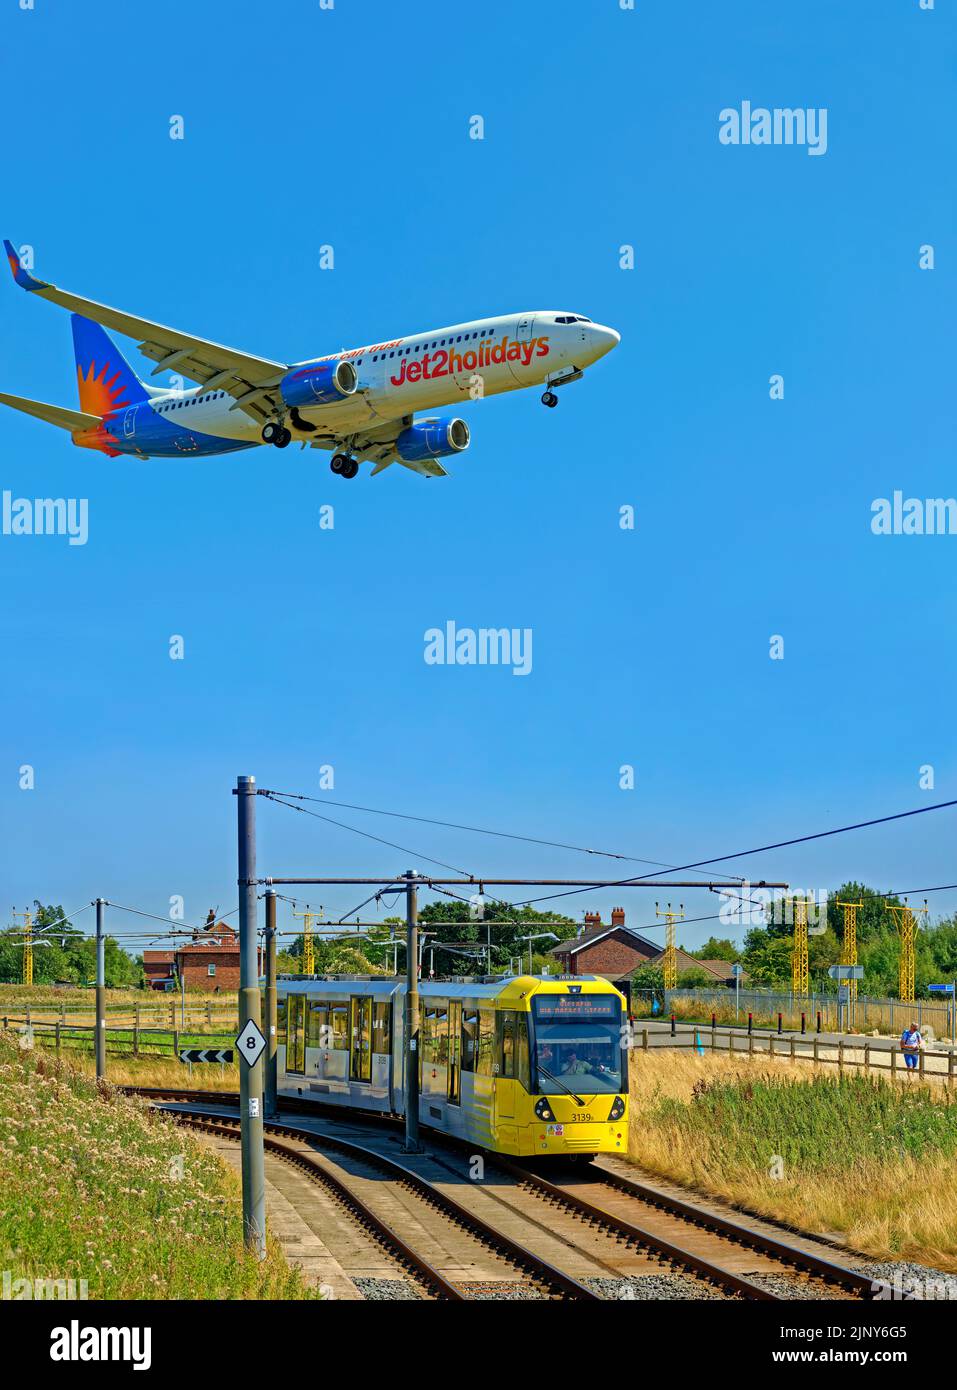 Il tram Manchester Metrolink si avvicina alla stazione dell'aeroporto di Manchester, Manchester, Inghilterra. Foto Stock